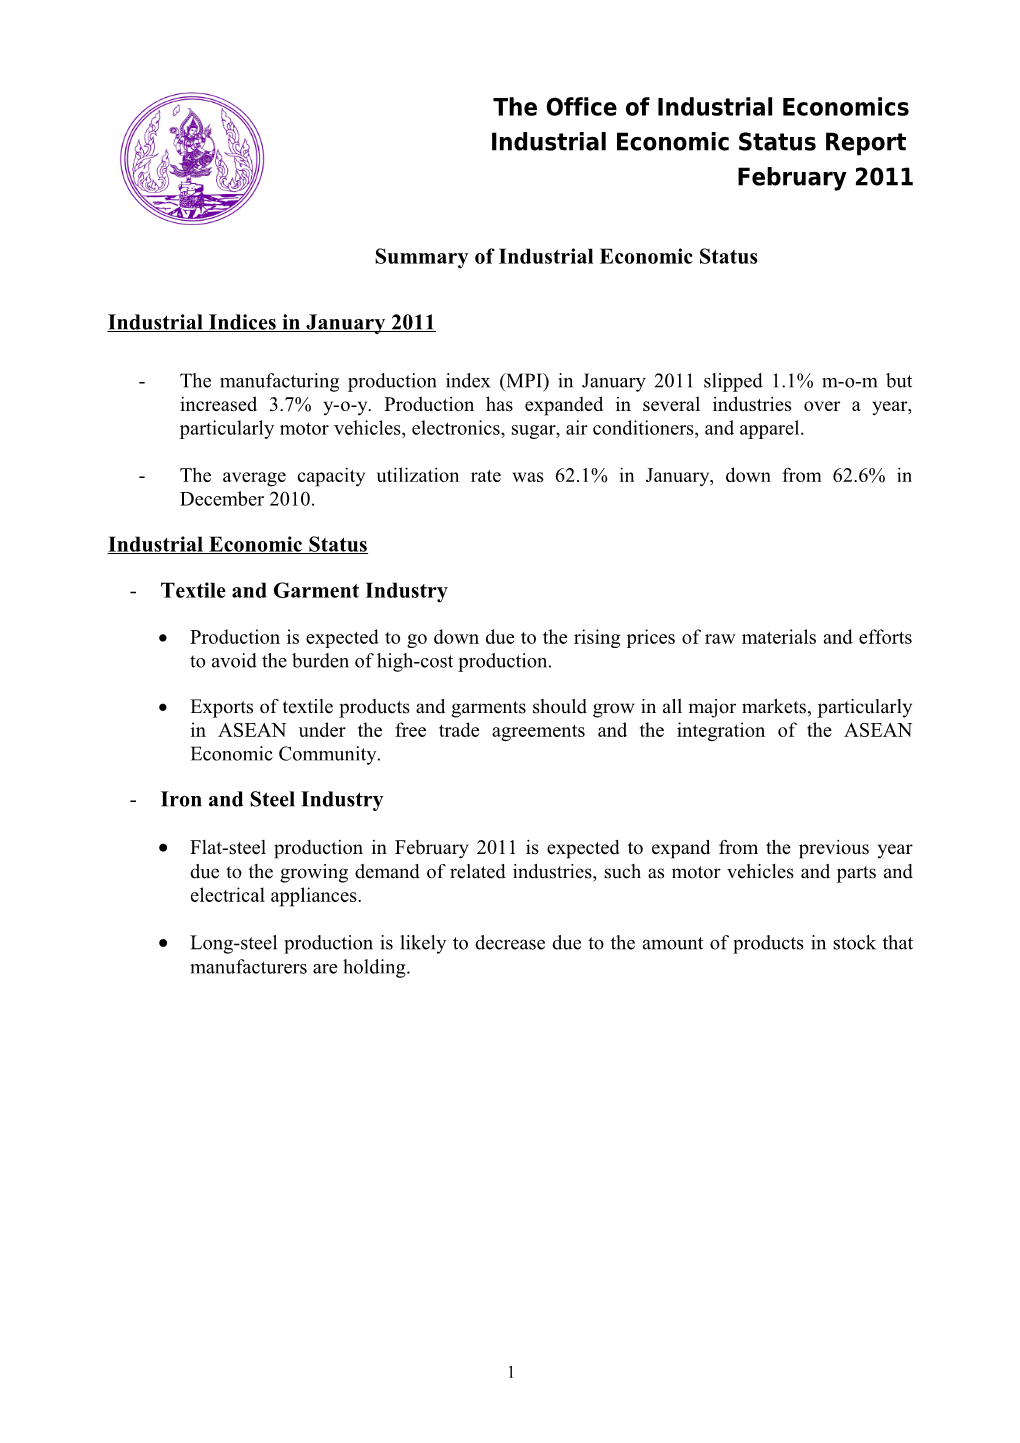 Summary of Industrial Economic Status